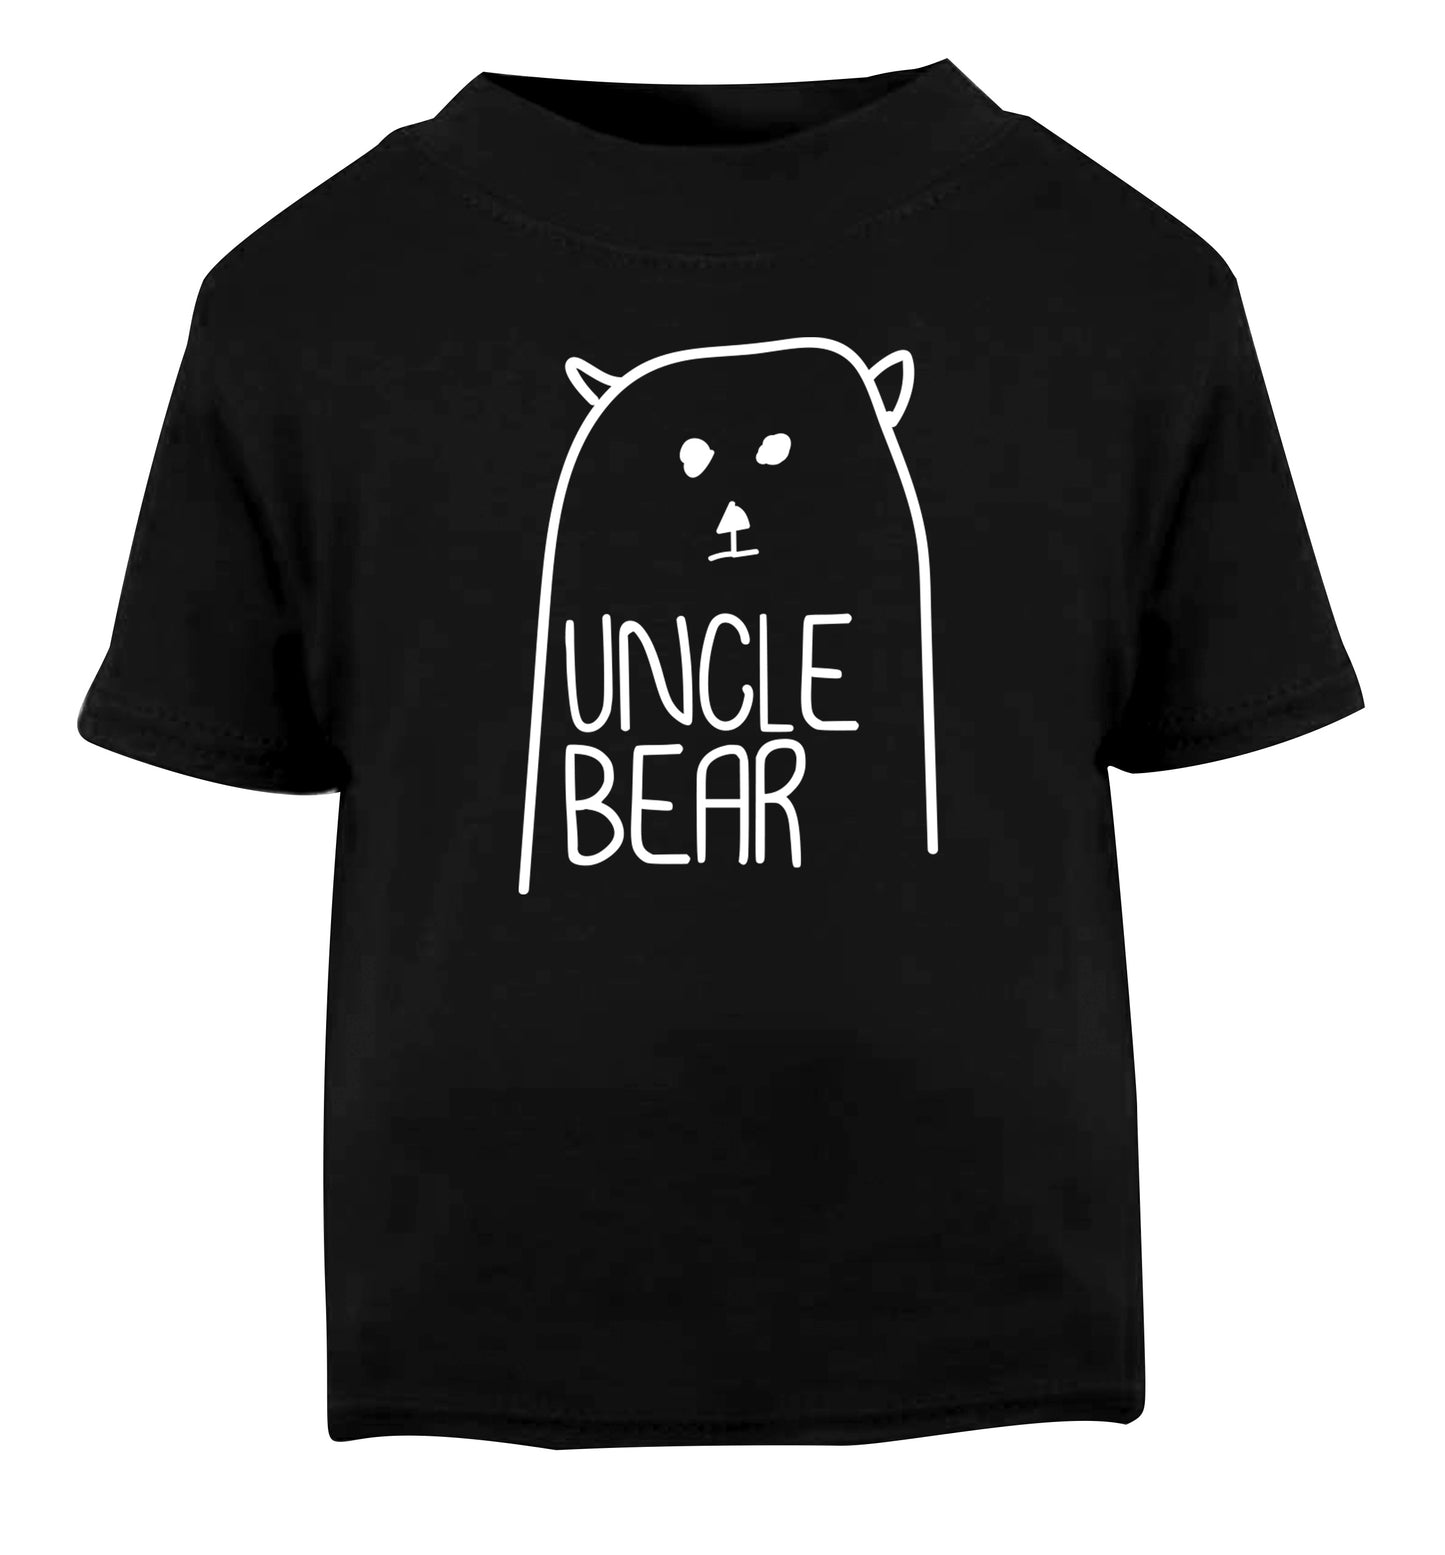 Uncle bear Black Baby Toddler Tshirt 2 years